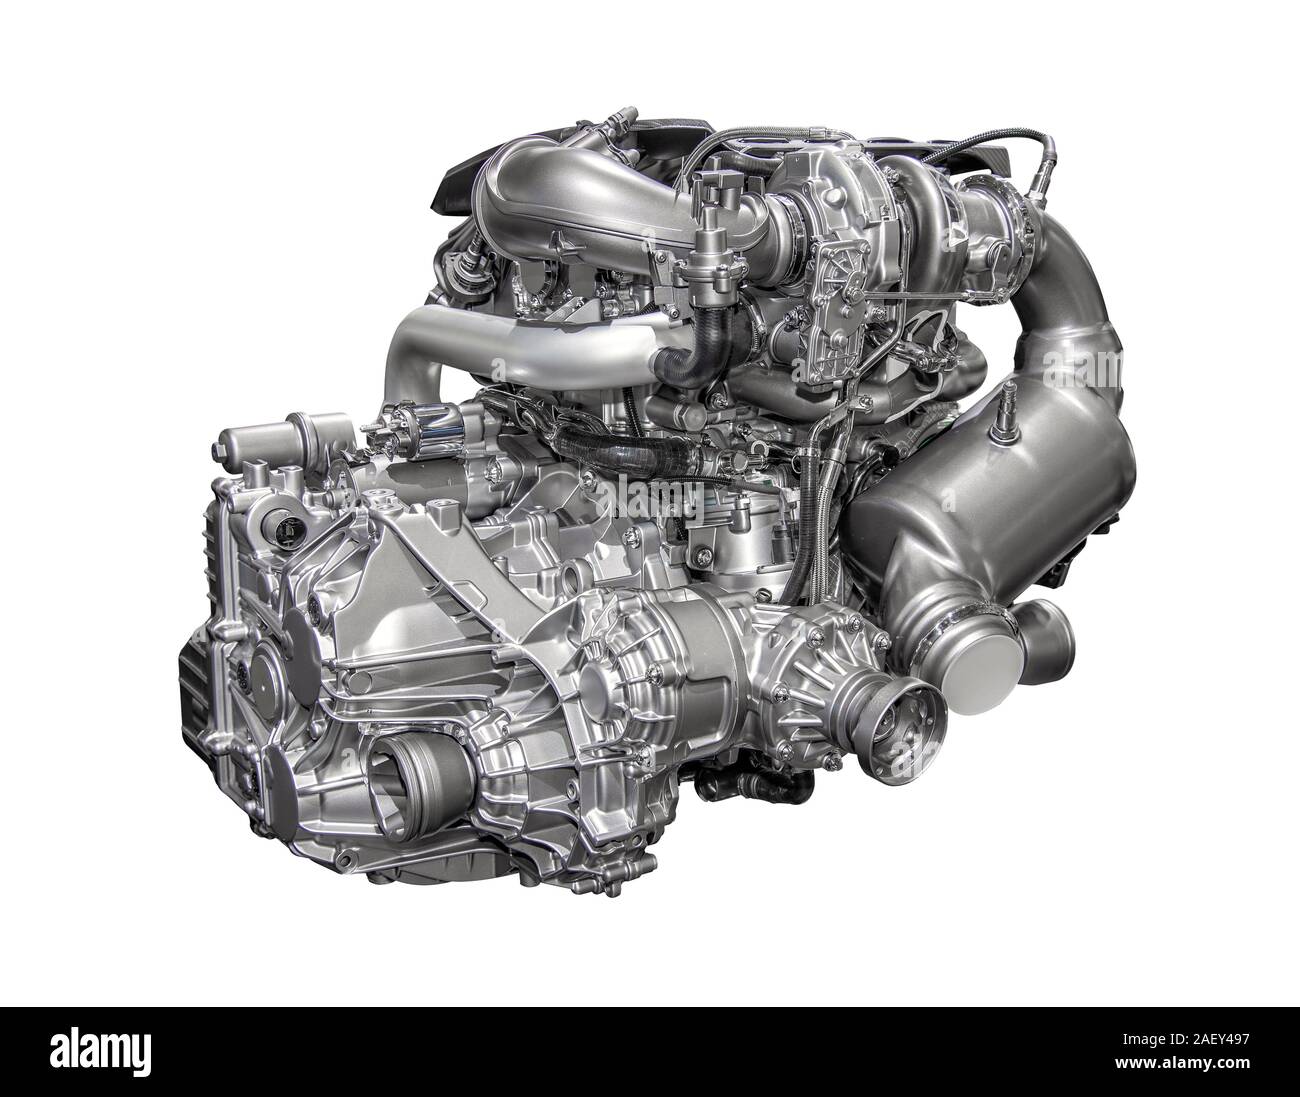 Powerful 4-cylinder gasoline engine of a modern car Stock Photo